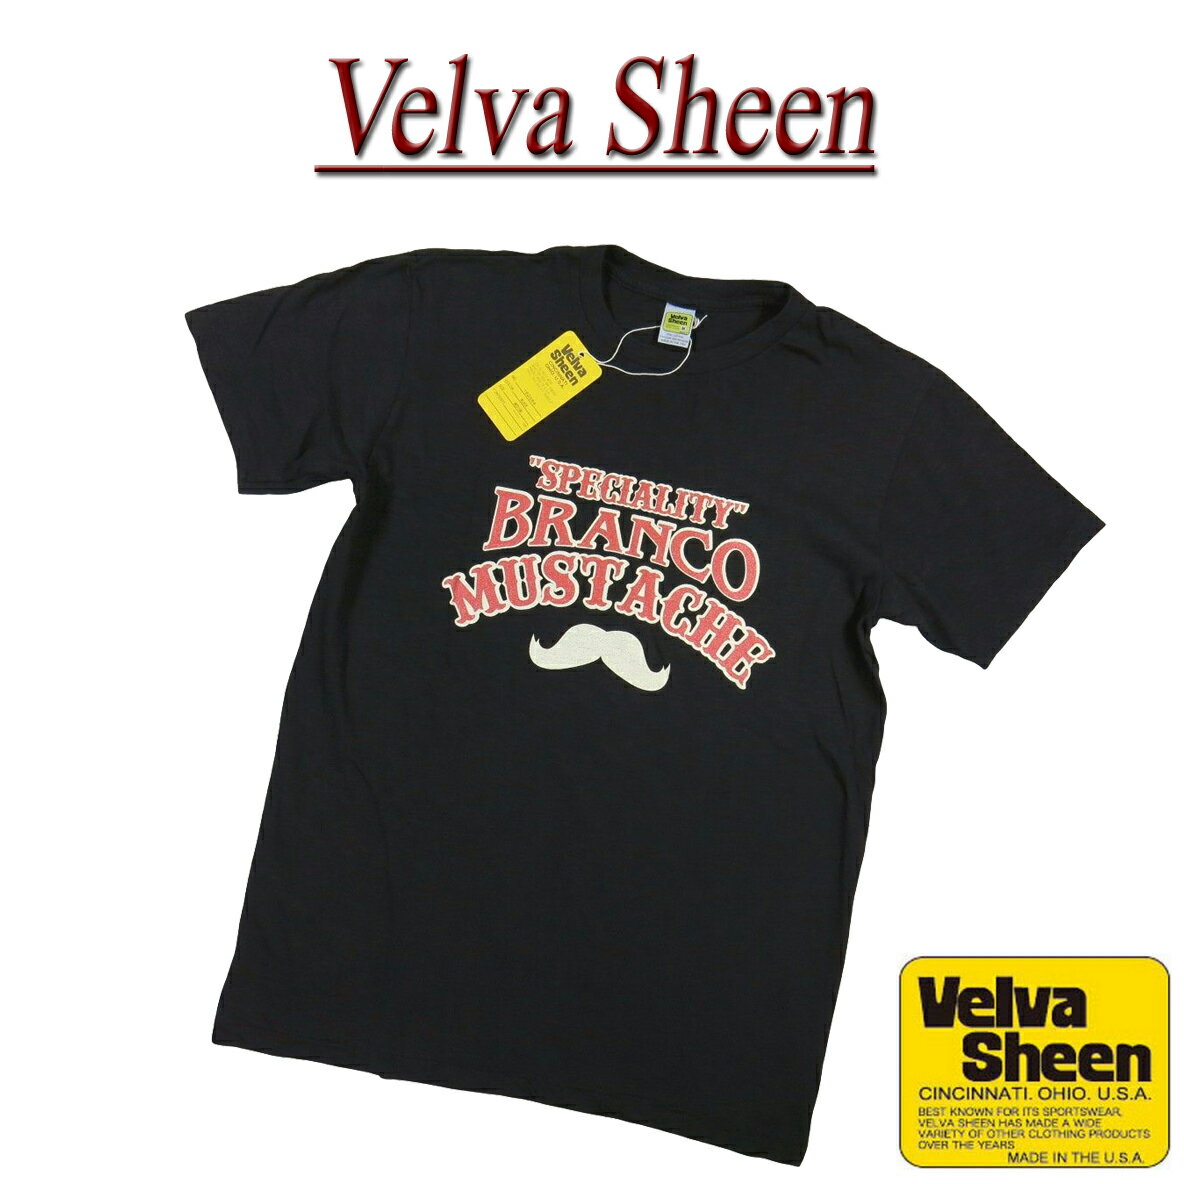  jd831 新品 Velva Sheen USA製 BRANCO MUSTACHE TEE 半袖 スラブ Tシャツ 162084 メンズ ベルバシーン ティーシャツ イエローレーベル Made in USA 